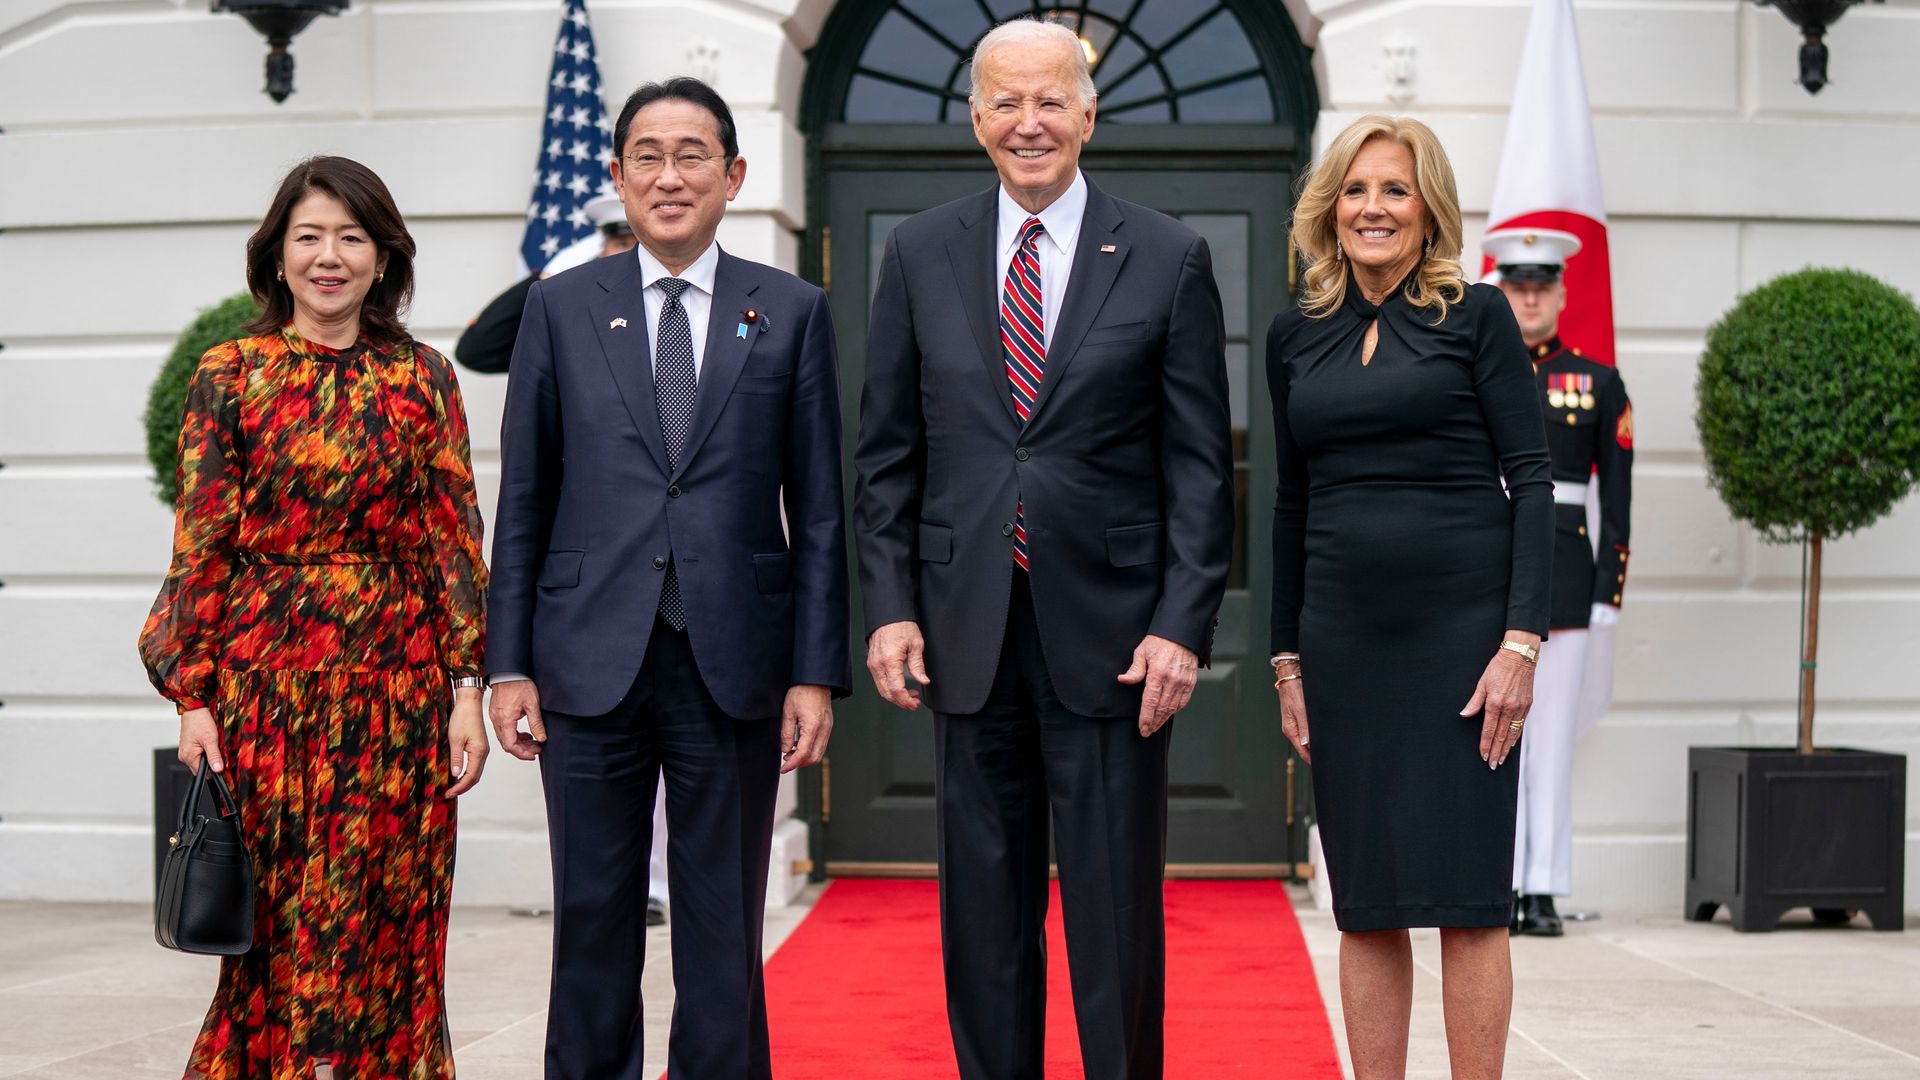 President Joe Biden, second right, and first lady Jill Biden, right, welcome Fumio Kishida, Japan’s prime minister, and his wife, Yuko Kishida, to the White House.